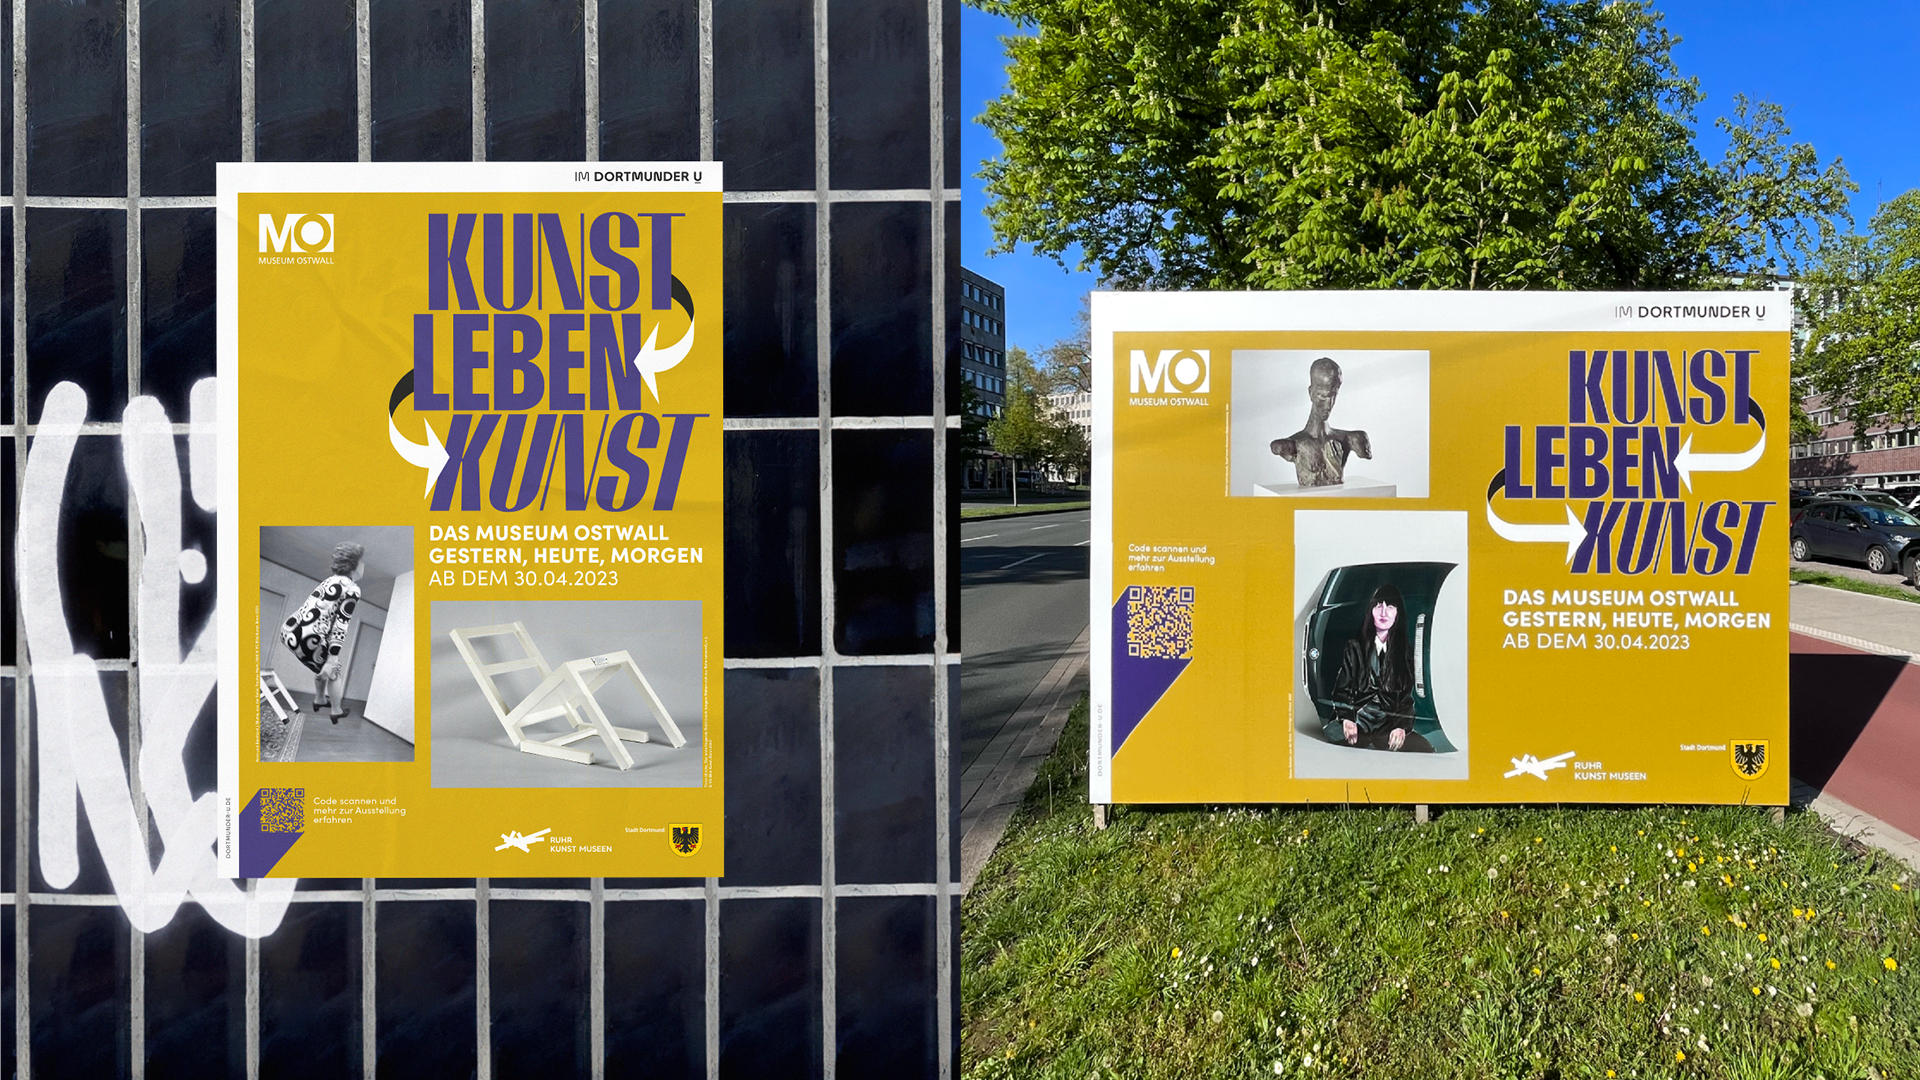 Poster and 18/1 poster for the exhibition Kunst Leben Kunst by Museum Ostwall in the Dortmunder U - Design by Florida Brand Design.